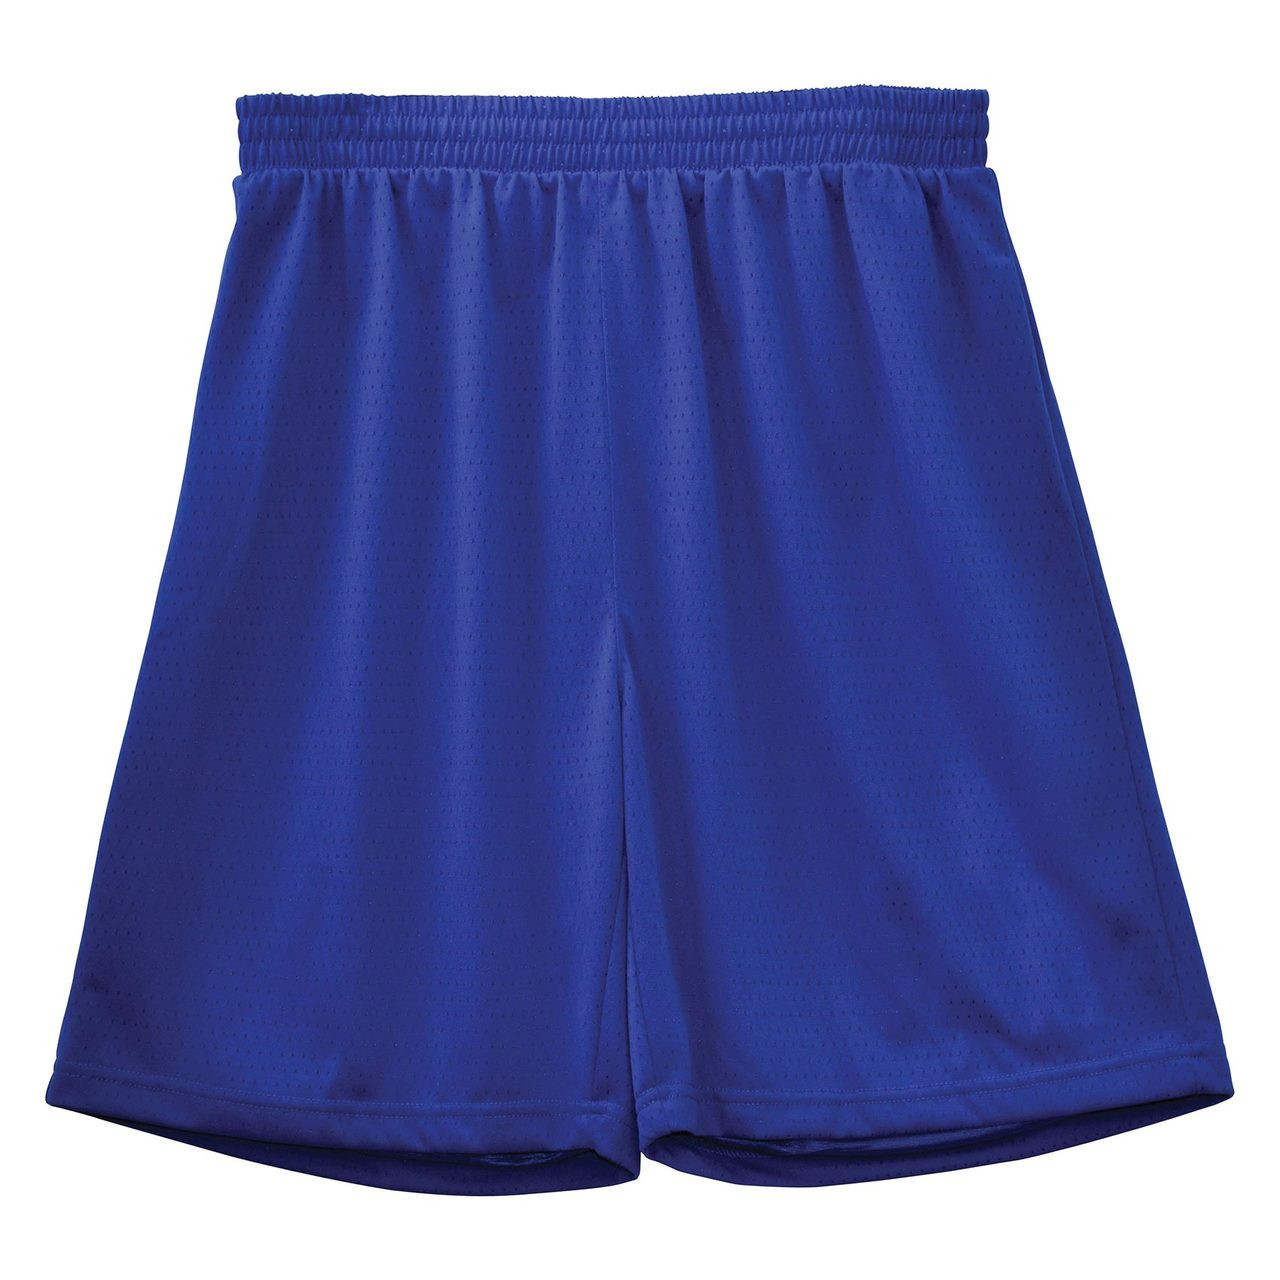 Wholesale Shorts, Buy Bulk Shorts